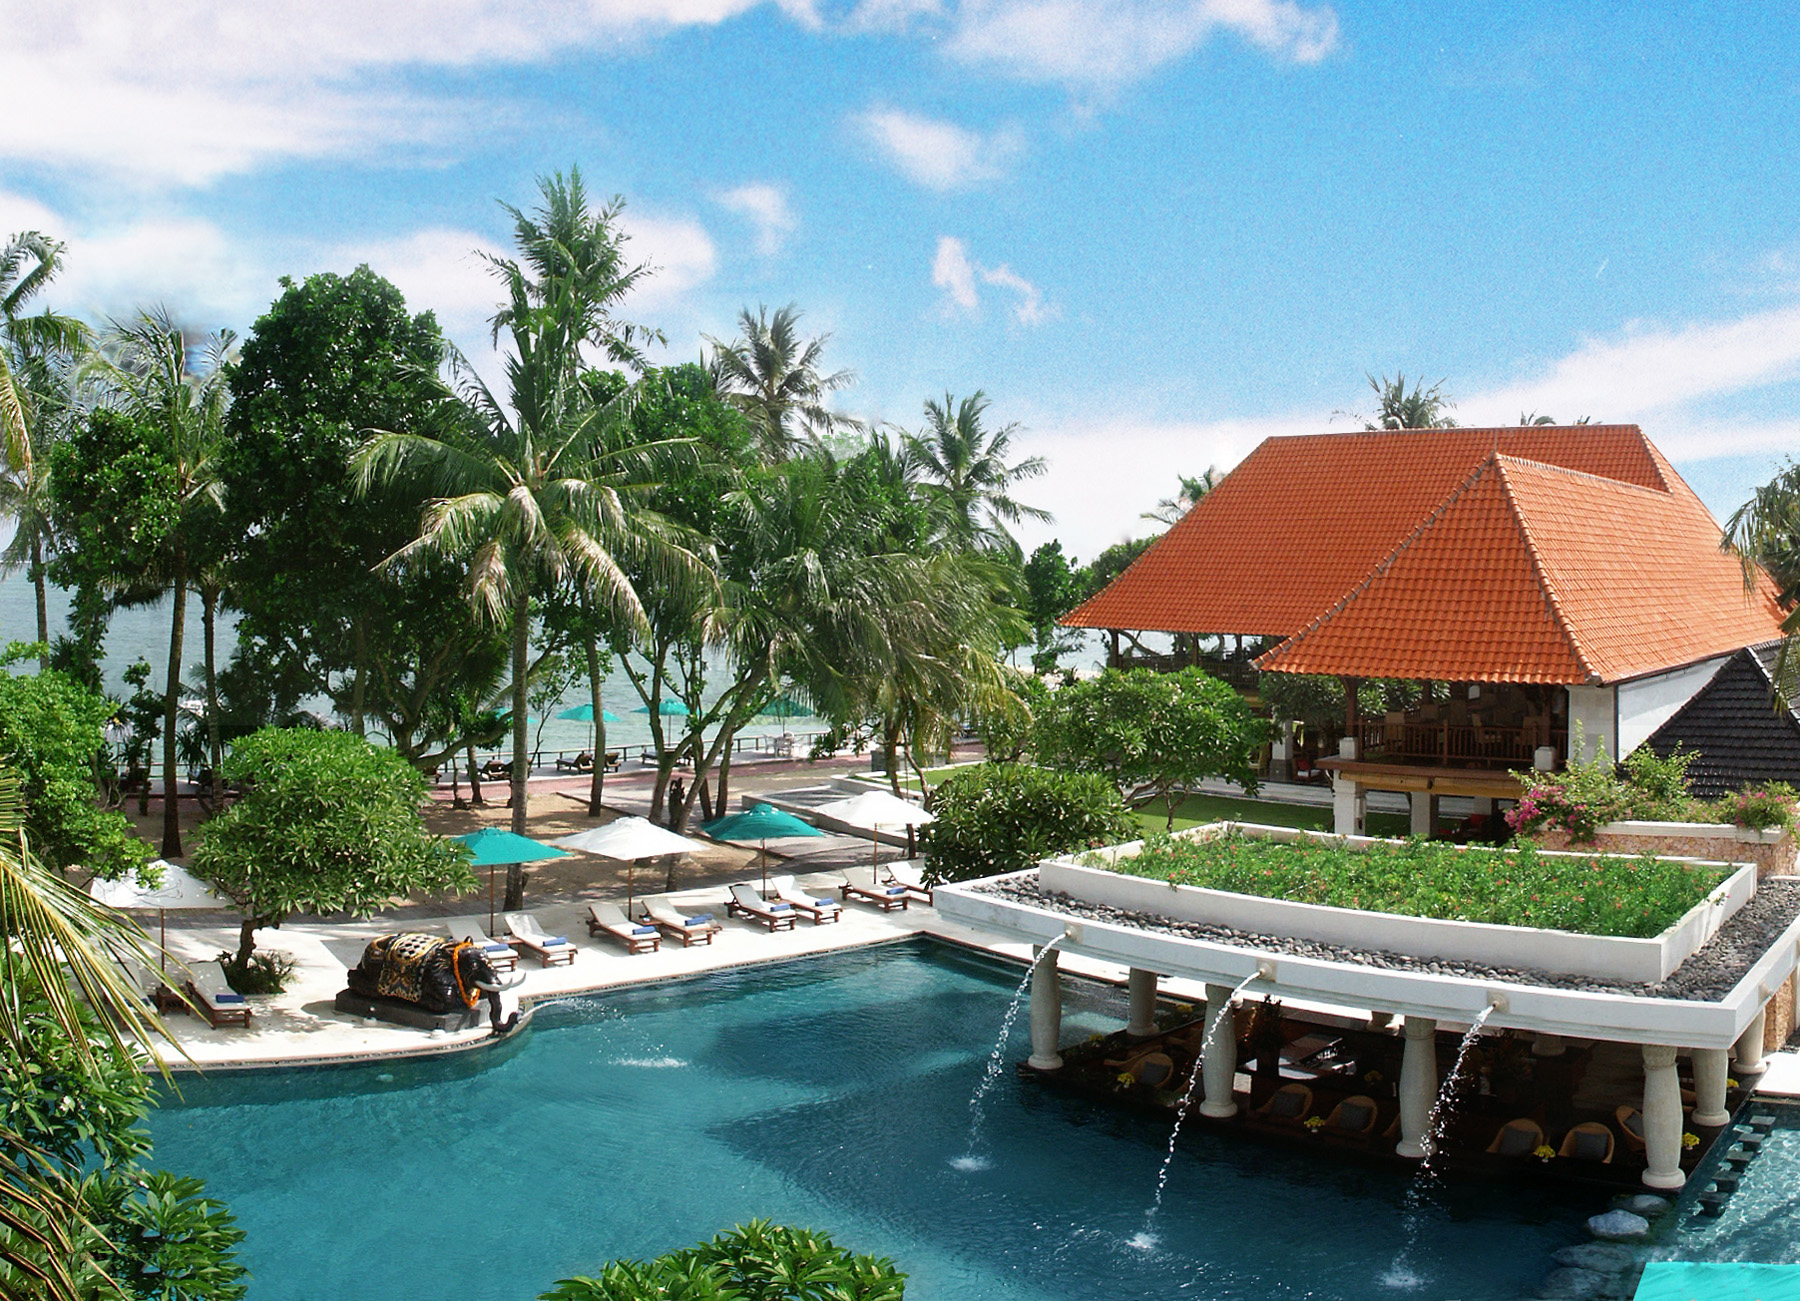 Hotel Puri Santrian HOTELS Bali  direct via bali  direct be